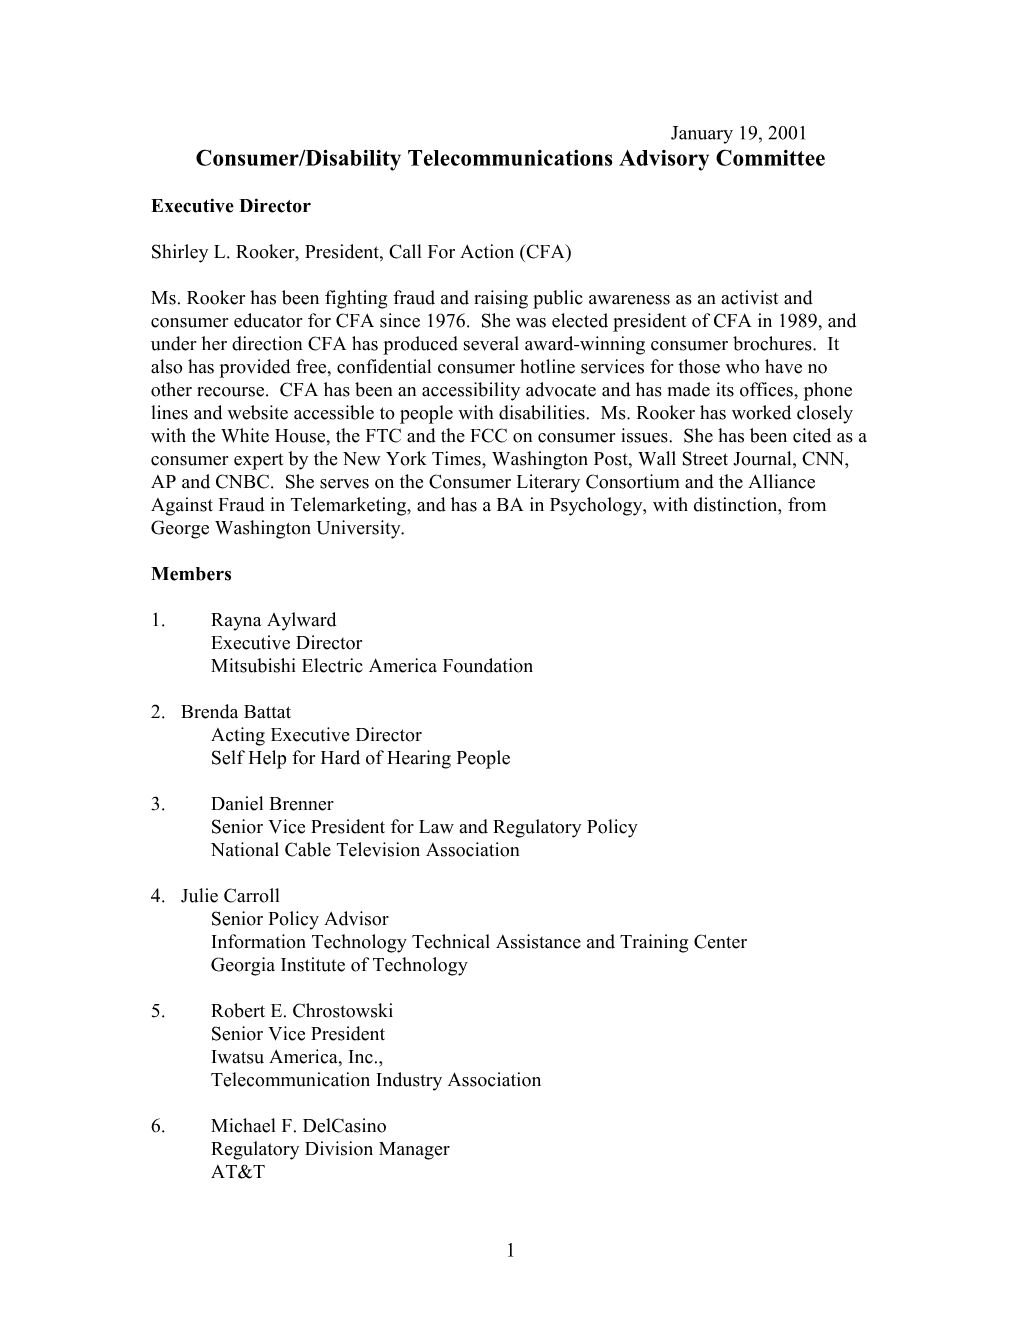 Consumer/Disability Telecommunications Advisory Committee